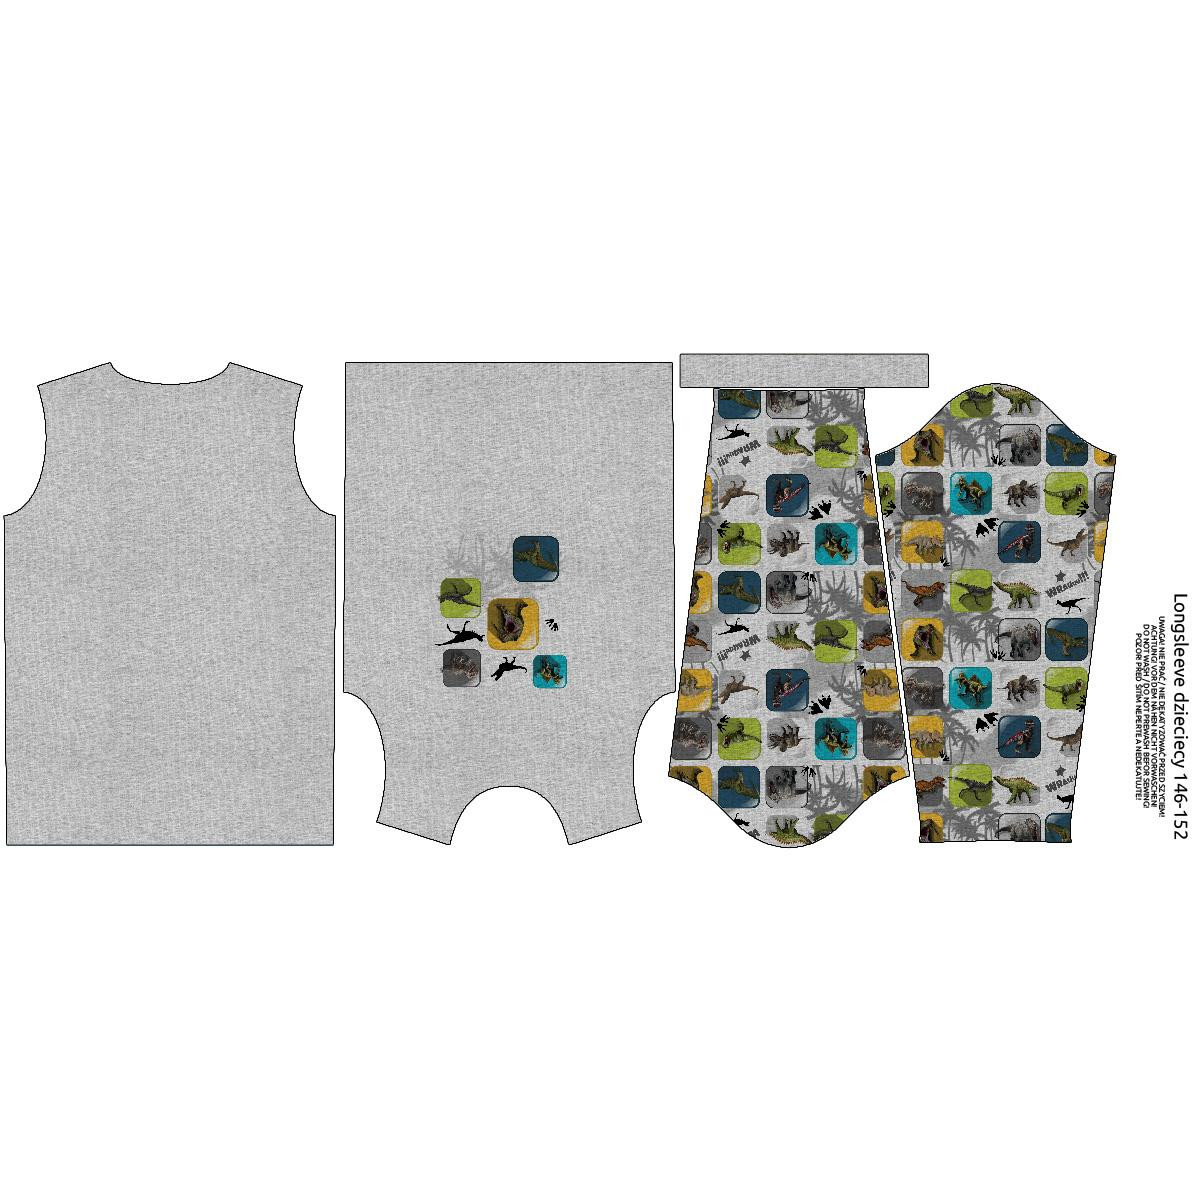 LONGSLEEVE - DINO TILES PAT. 5 / melange light grey - sewing set